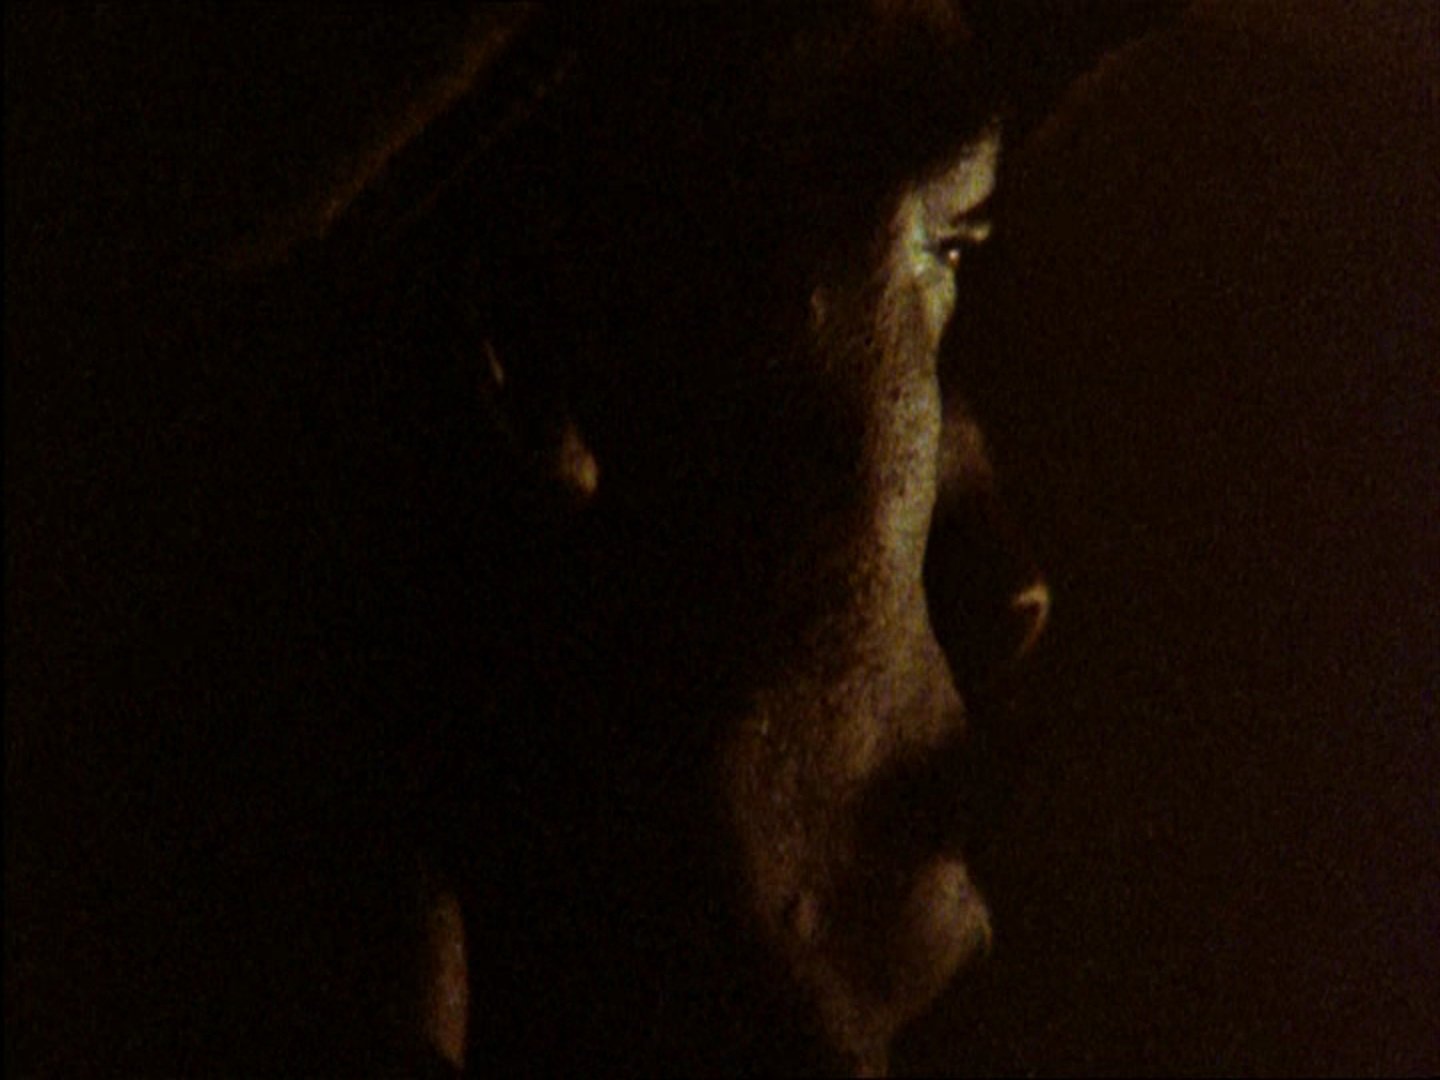  Fot. z filmu “Pieśni z Handsworth” (“Handsworth Songs”), reż. Black Audio Film Collective, 1986 